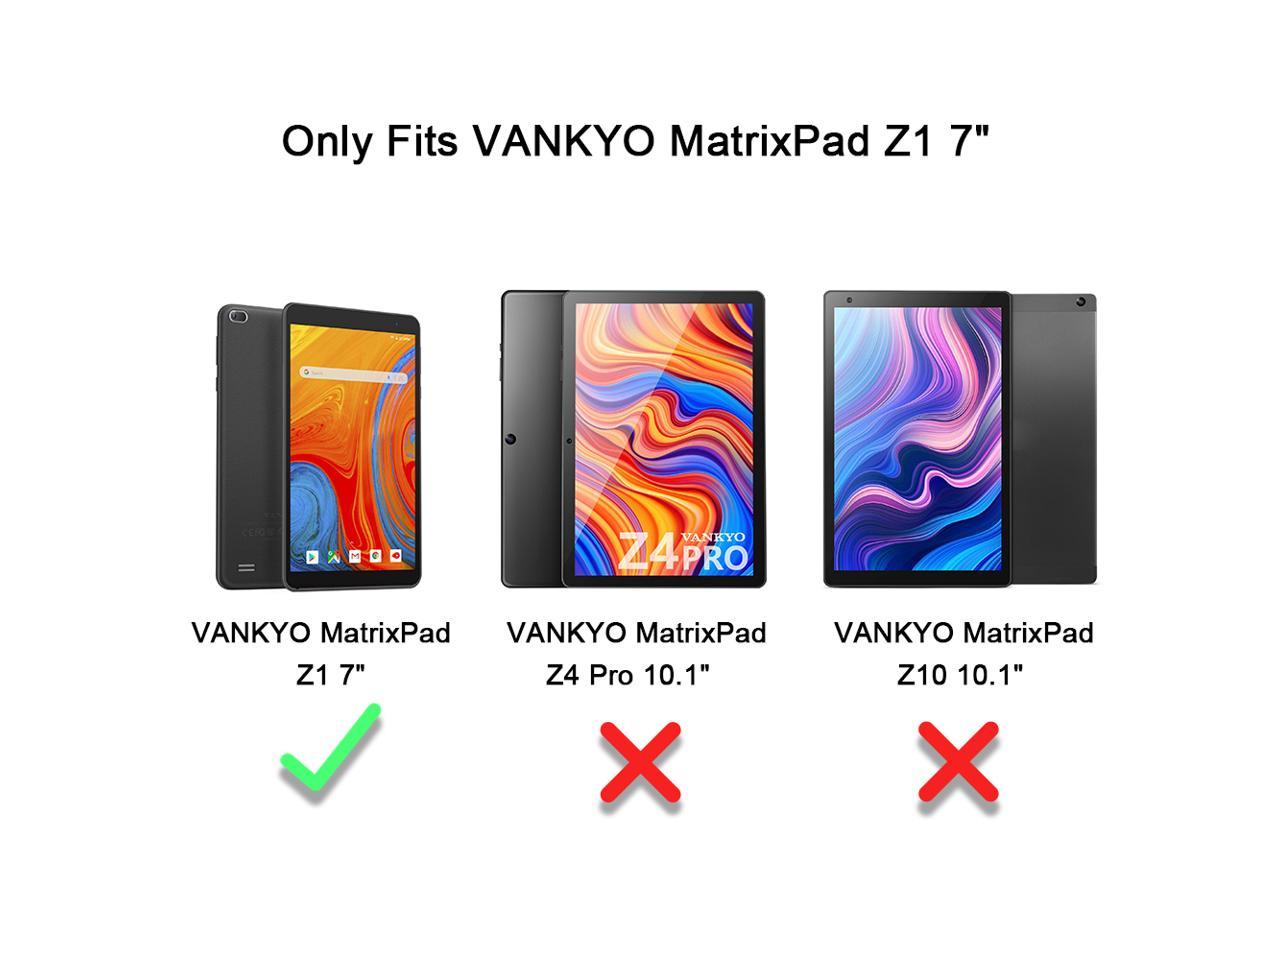 for VANKYO MatrixPad S7 Neoprene Tablet Sleeve Bag 7 Inch for qunyiCO Y7 for VUCATIMES N7 Z1